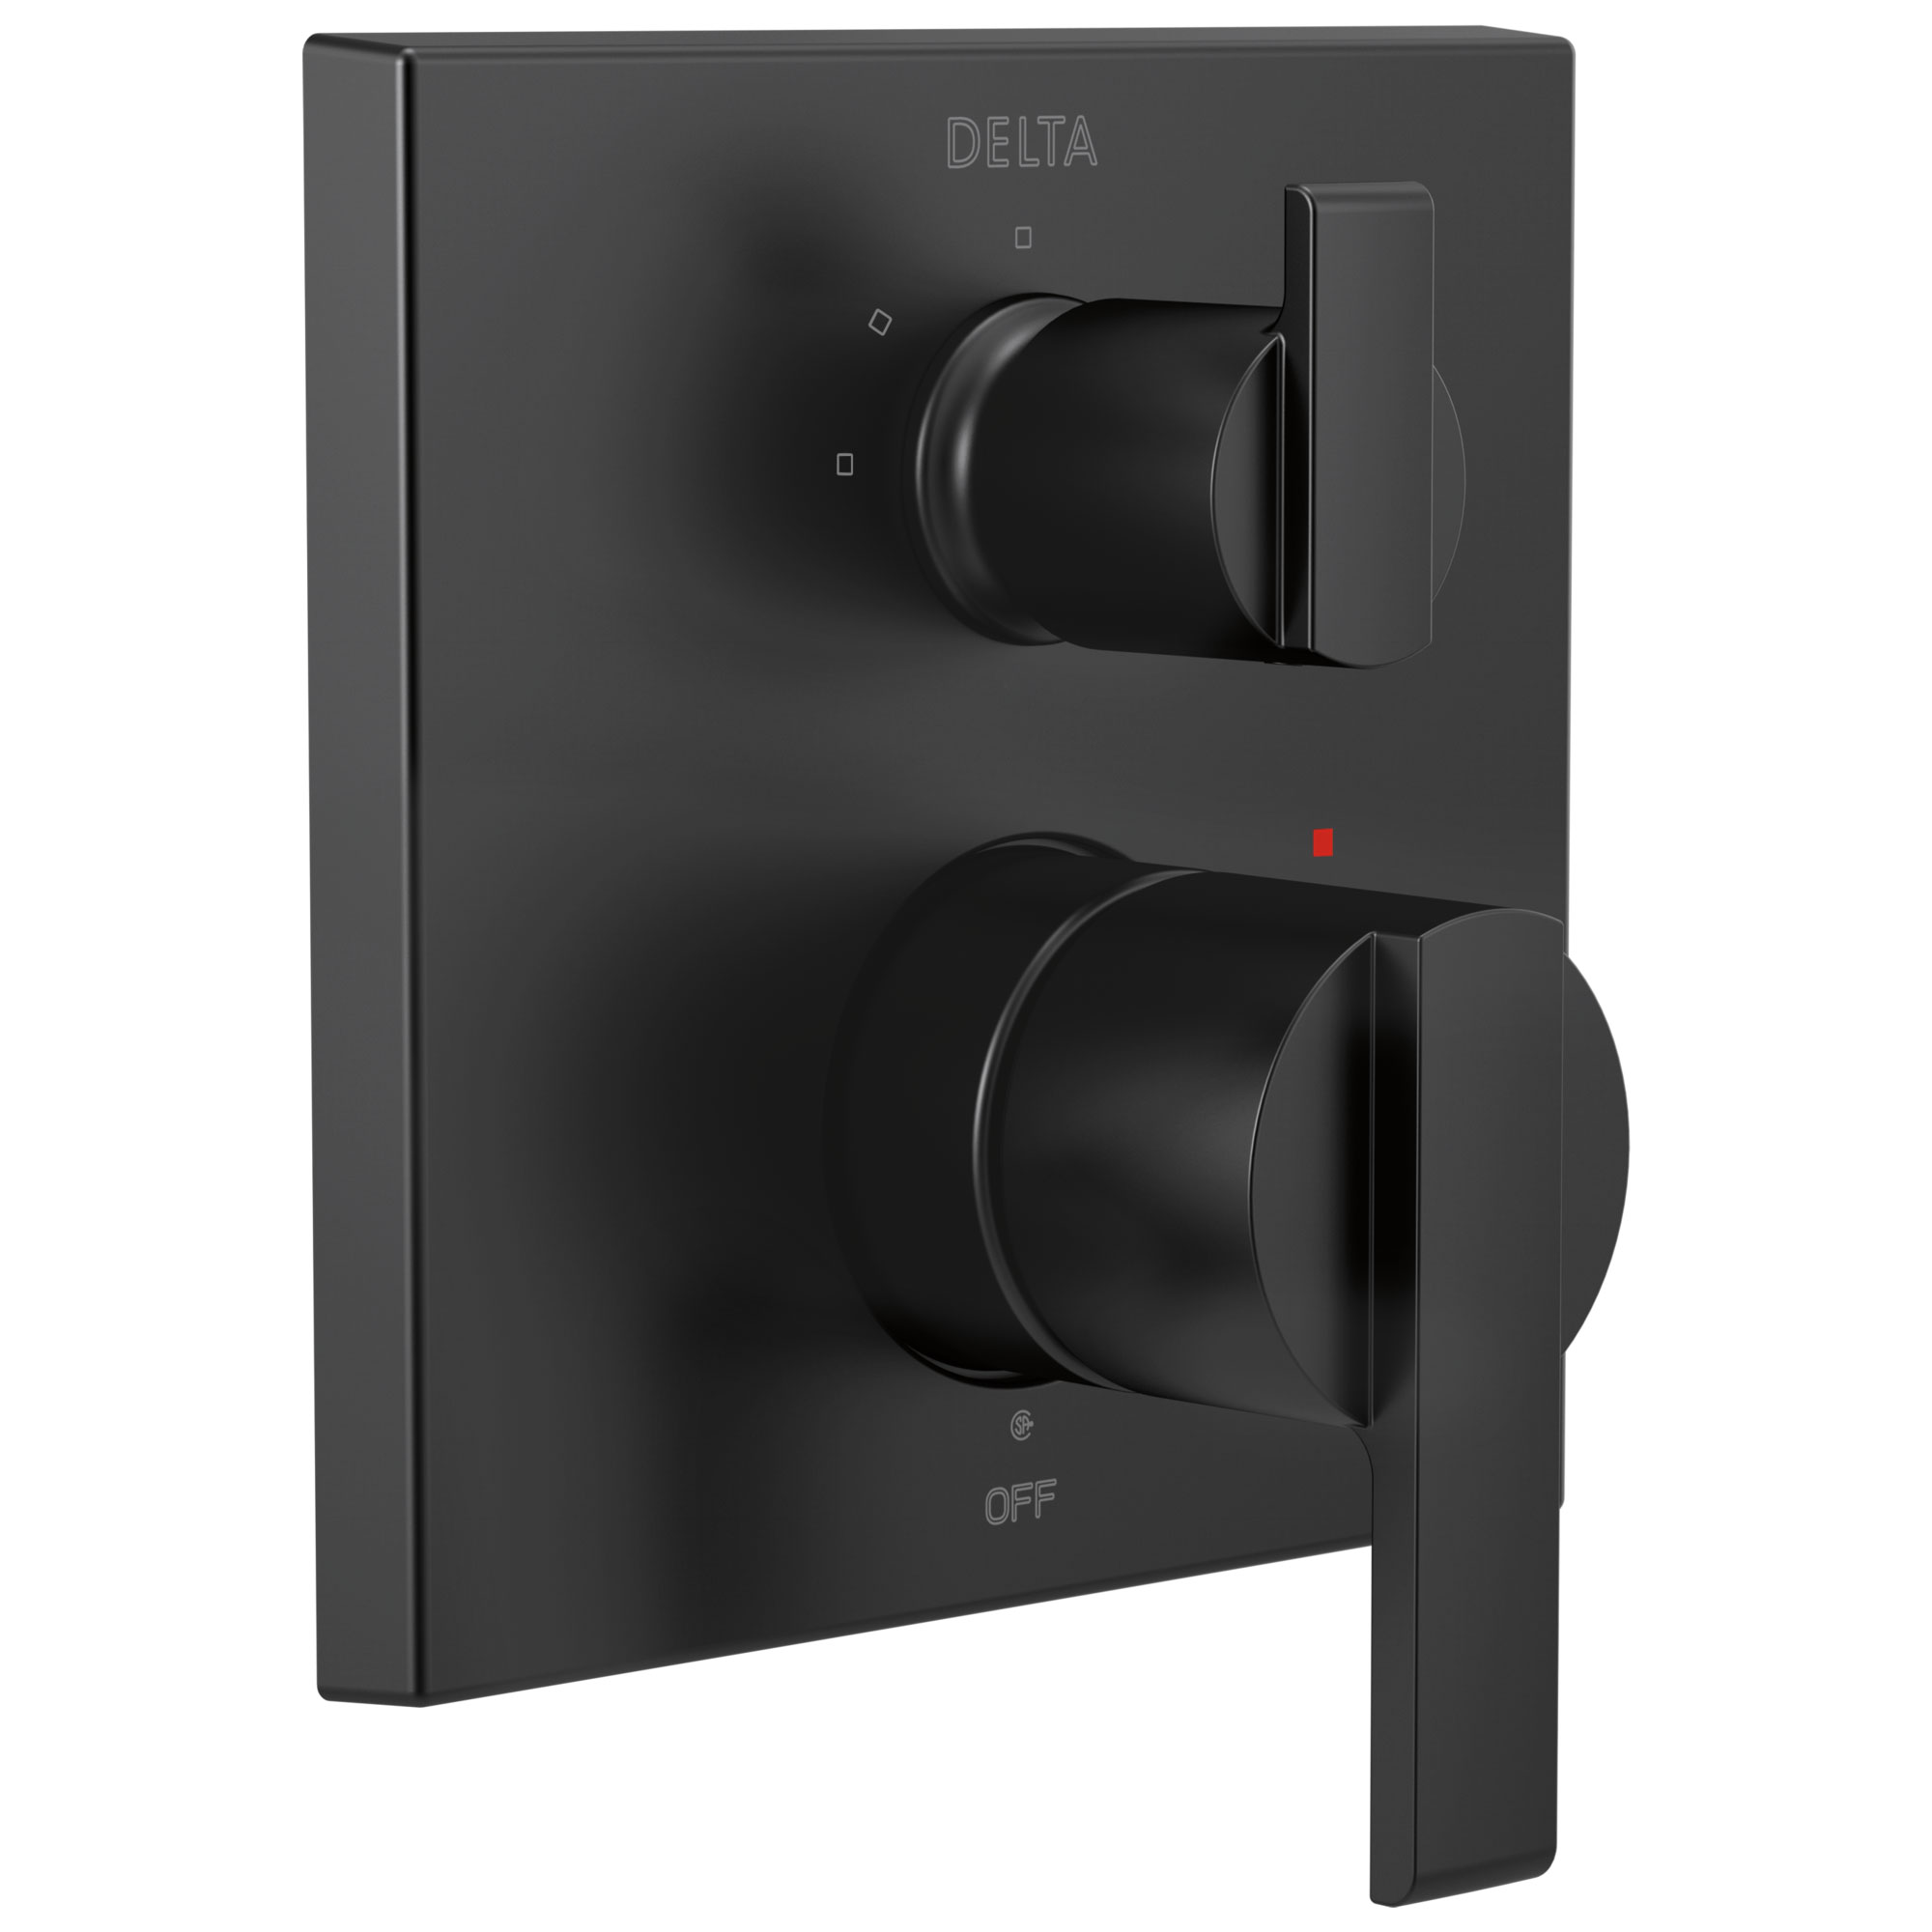 Qty (1): Delta Ara Matte Black Finish Angular Modern Monitor 14 Series Shower Control Trim Kit with 3 Setting Integrated Diverter